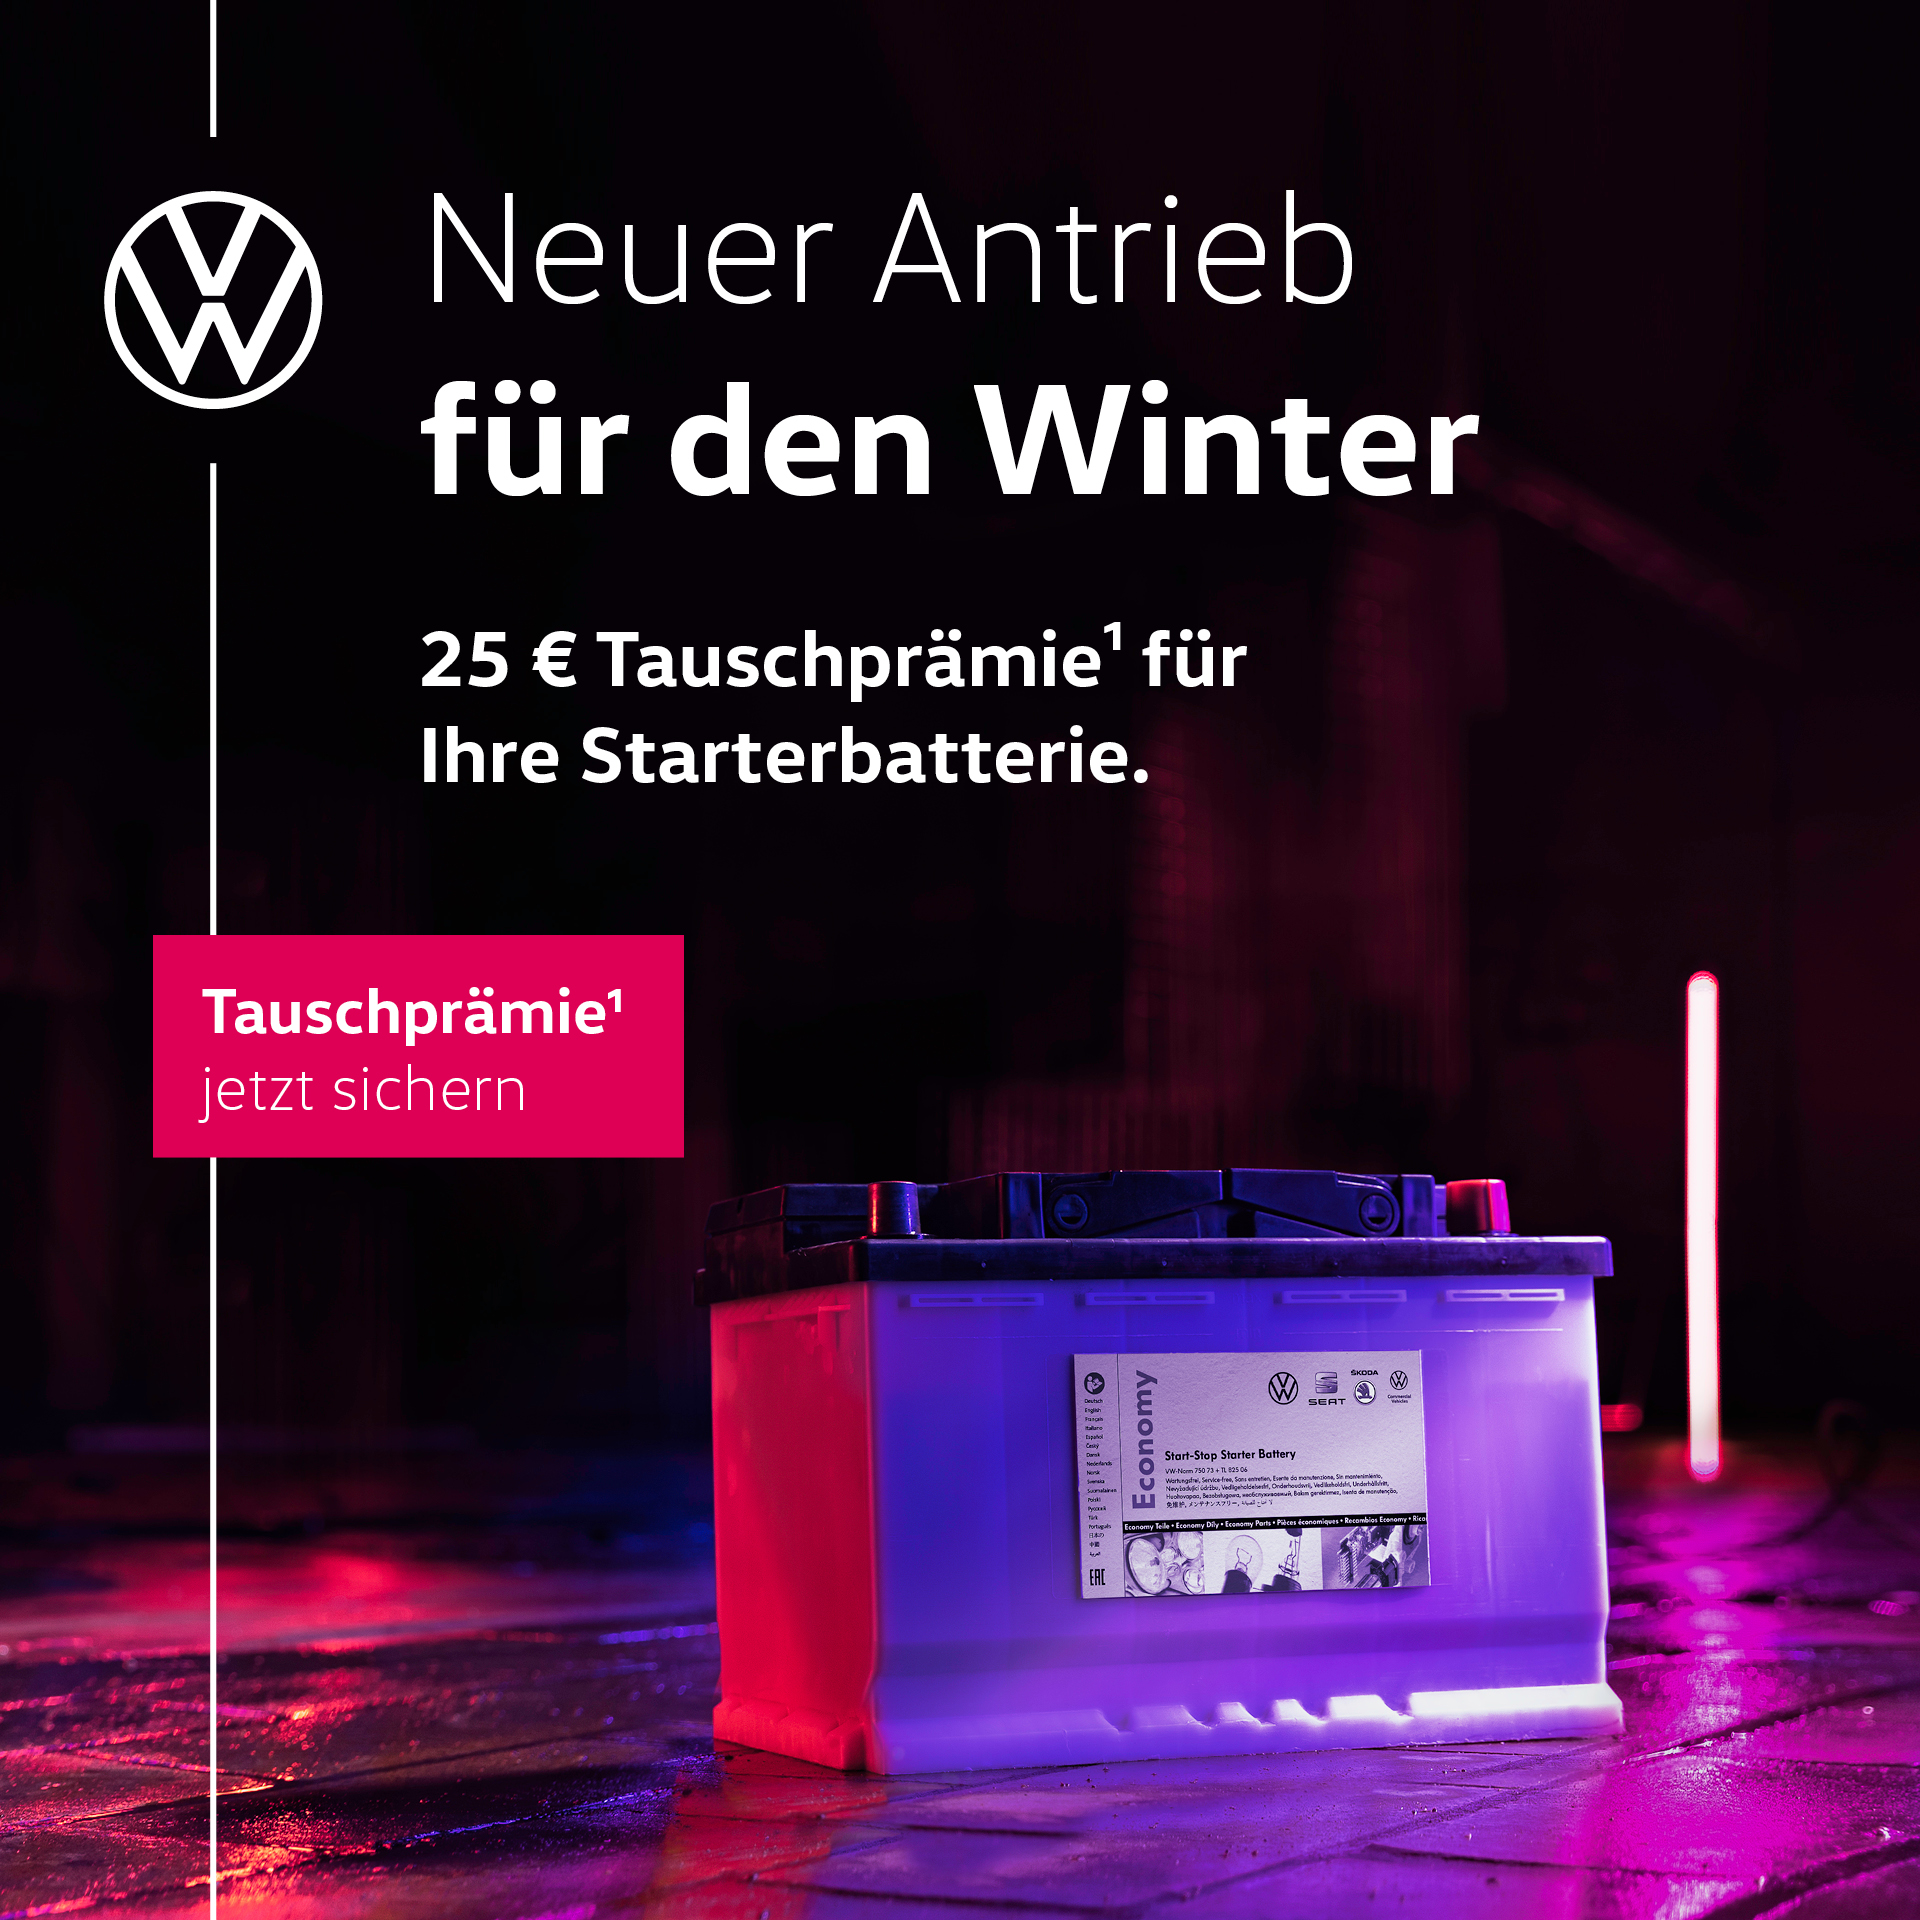 VW Now Dec Jan Feb Mar FB Cashback Starterbatterie BN 31032022